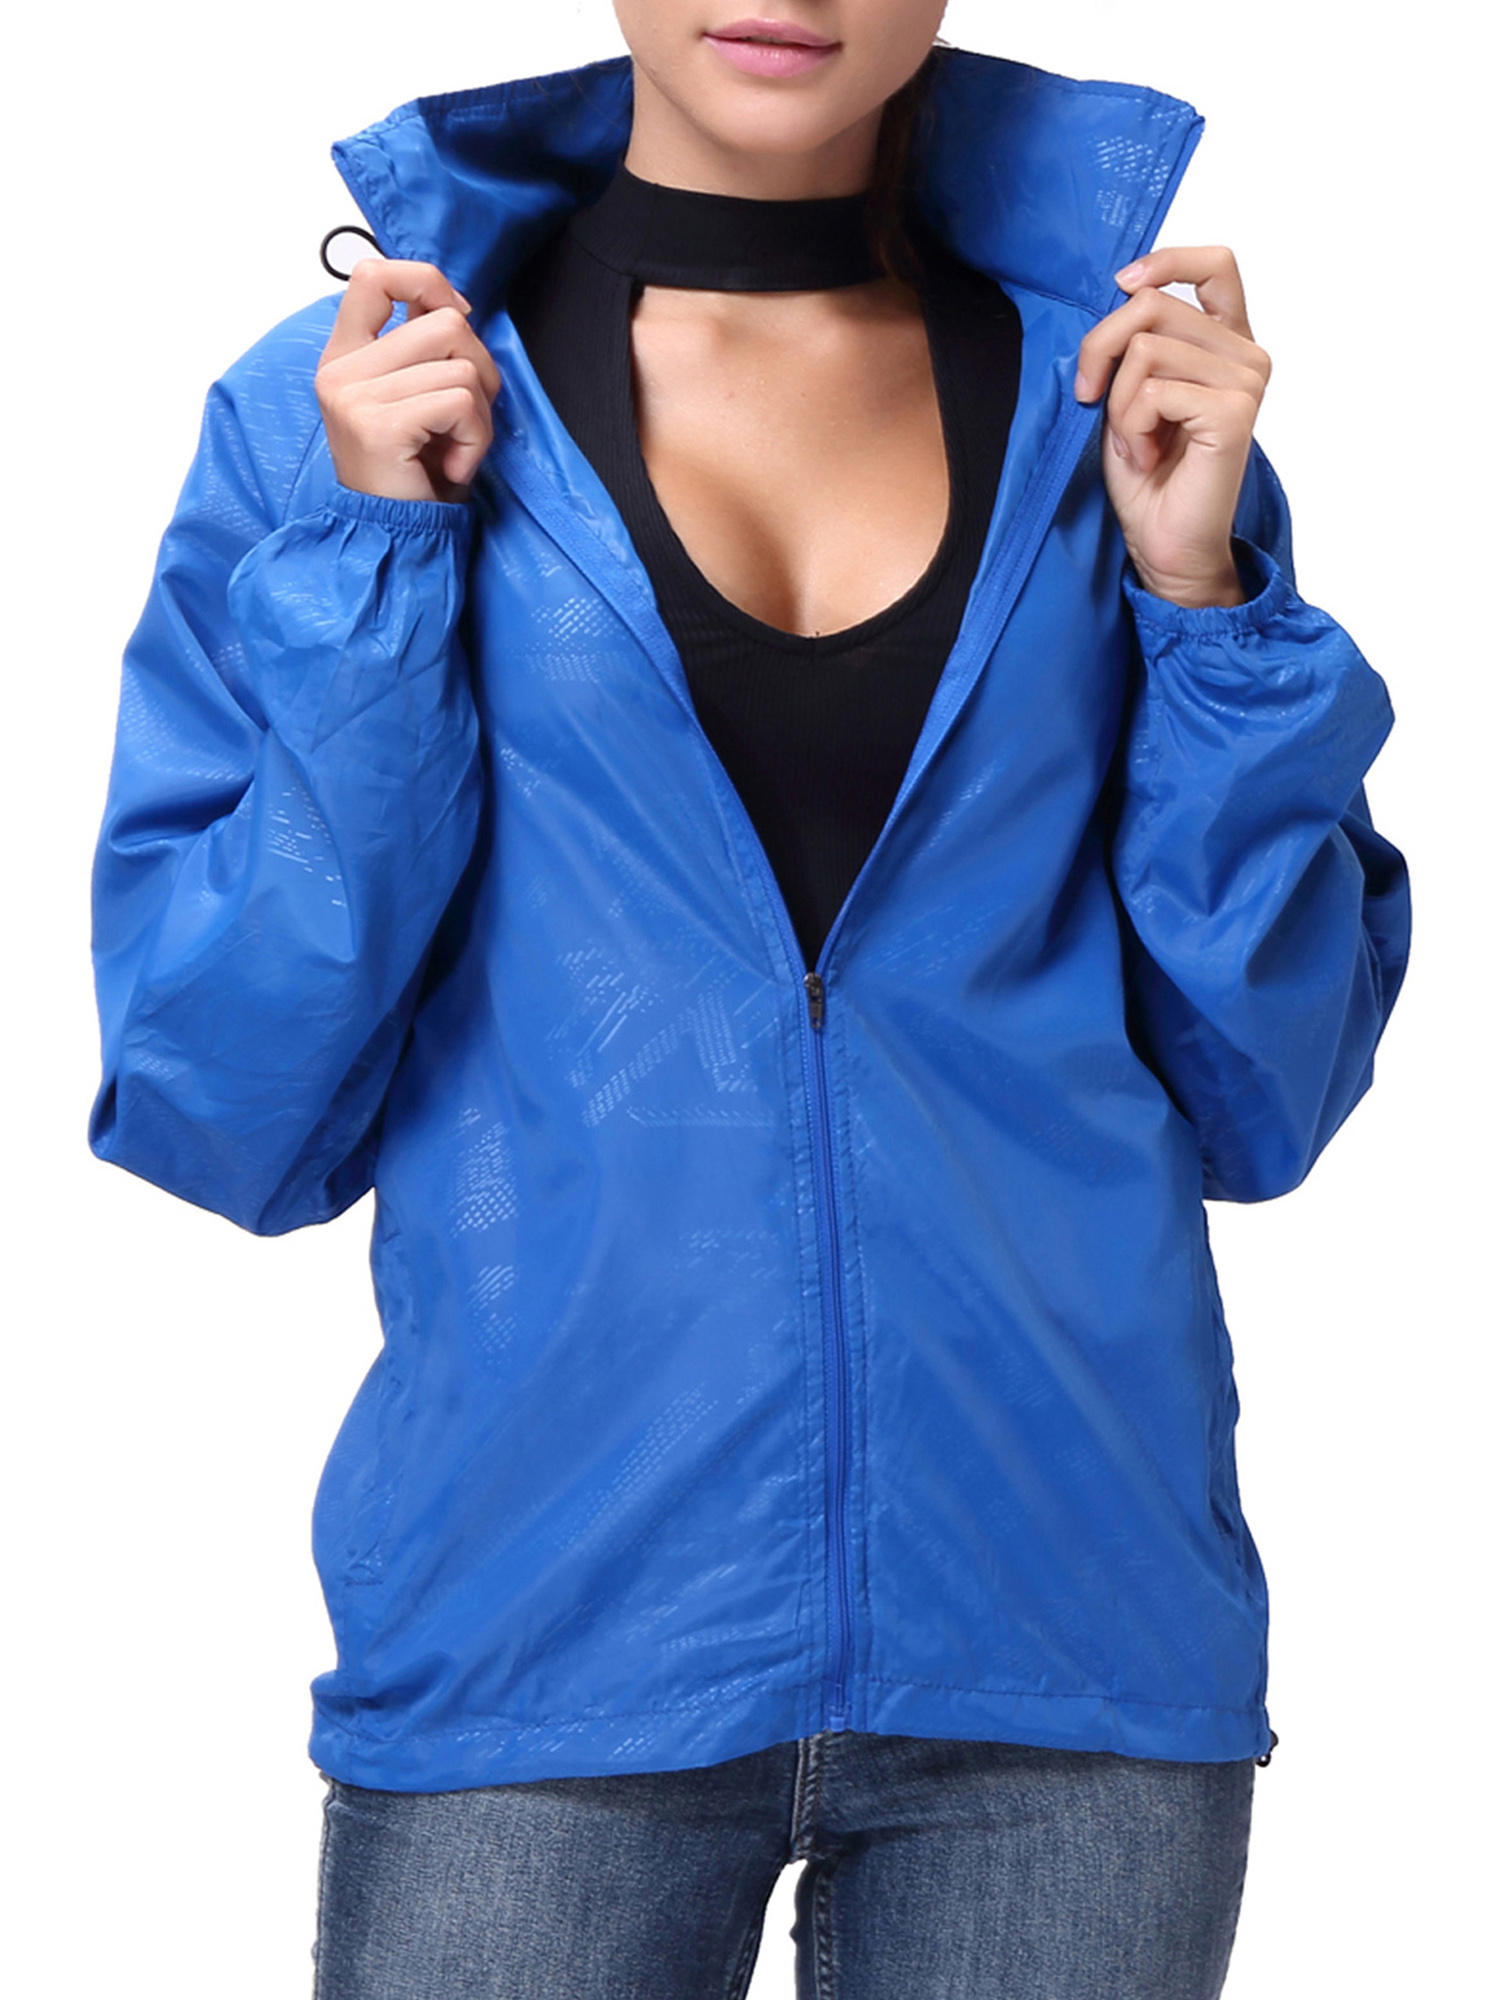 LELINTA Women Hoodie Jacket Lightweight Packable Rain Jacket Windbreaker Zipper Hooded Coats Slim Jacket Spring Long Sleeve Running Sport - image 4 of 9